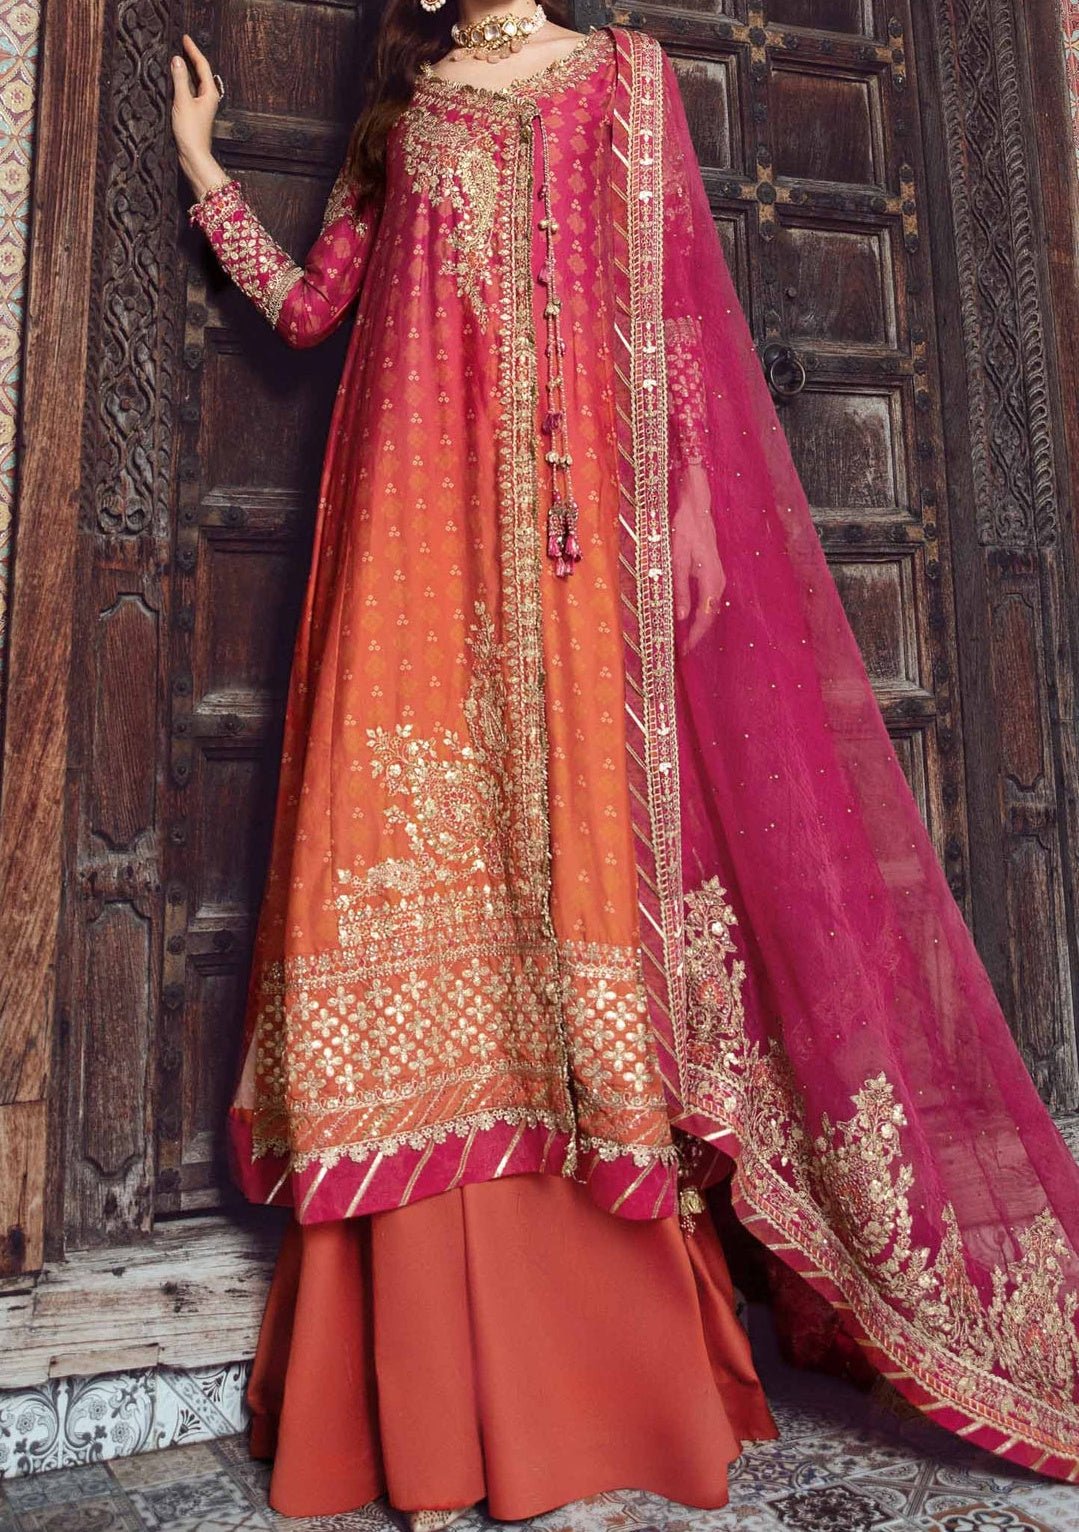 Maria.B Sateen Pakistani Luxury Cotton Satin Dress - db24100